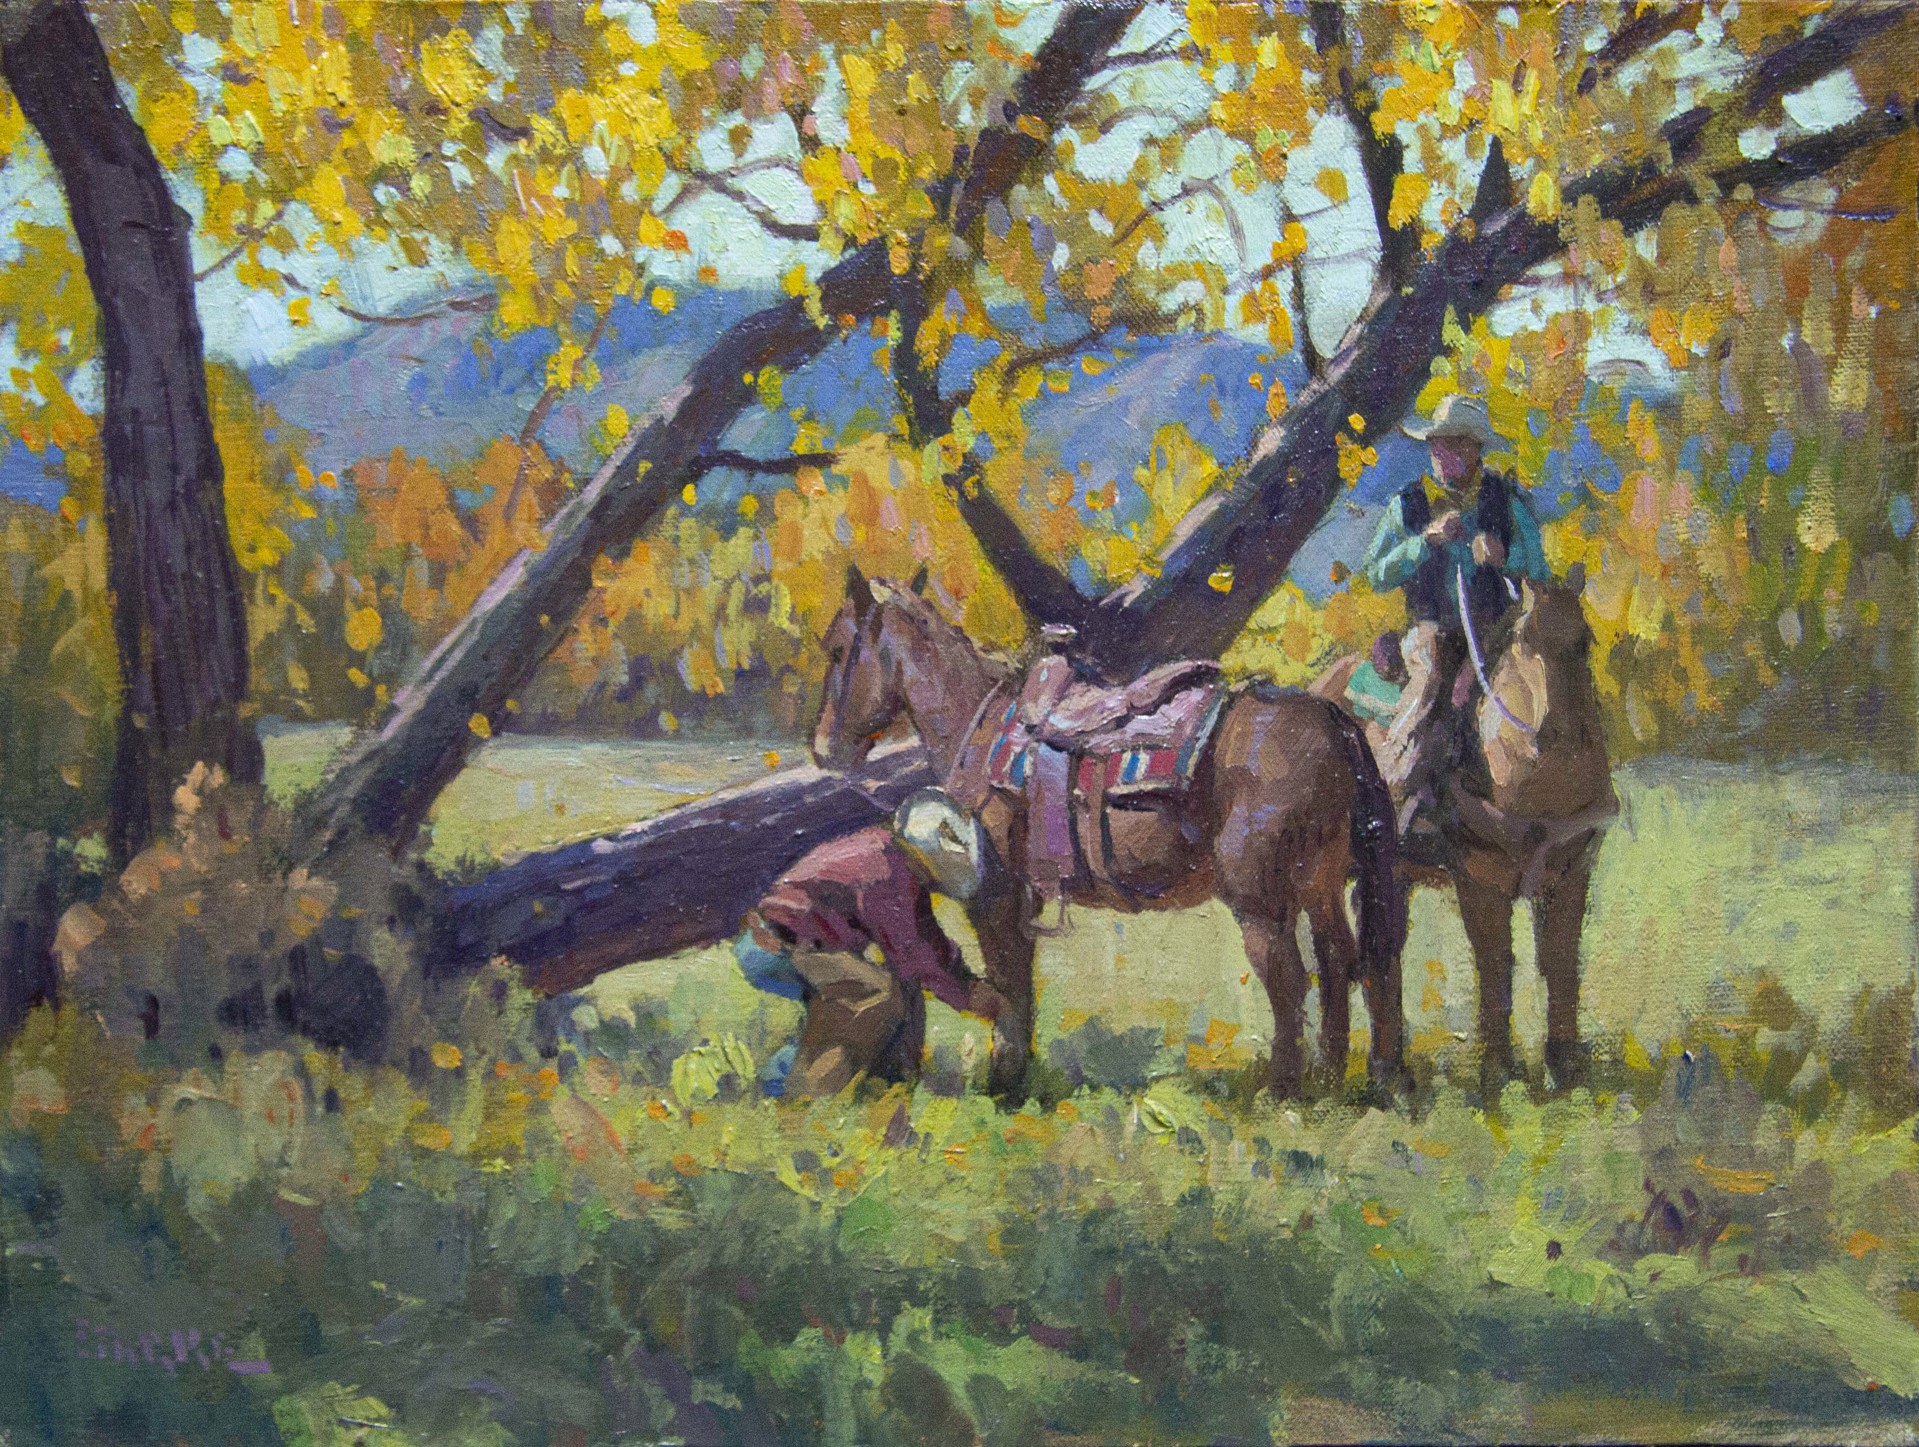 Riders in San Patricio, New Mexico by Phil Starke